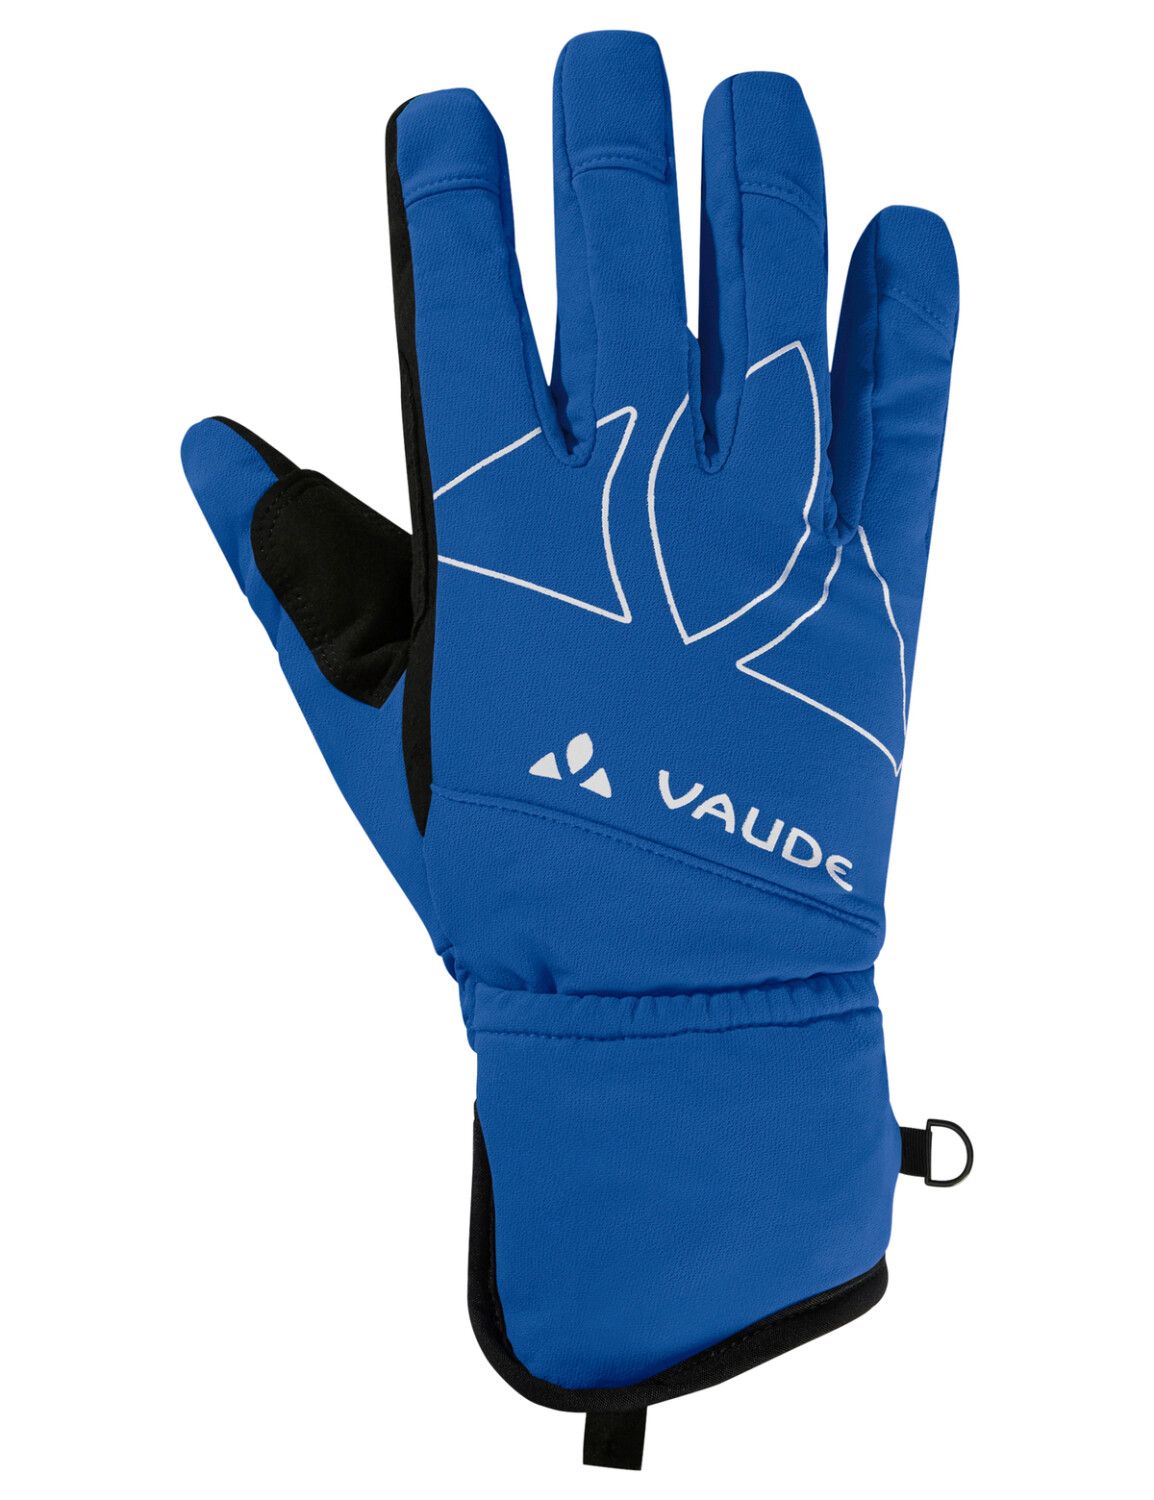 VAUDE La Varella Gloves (Bild 3)